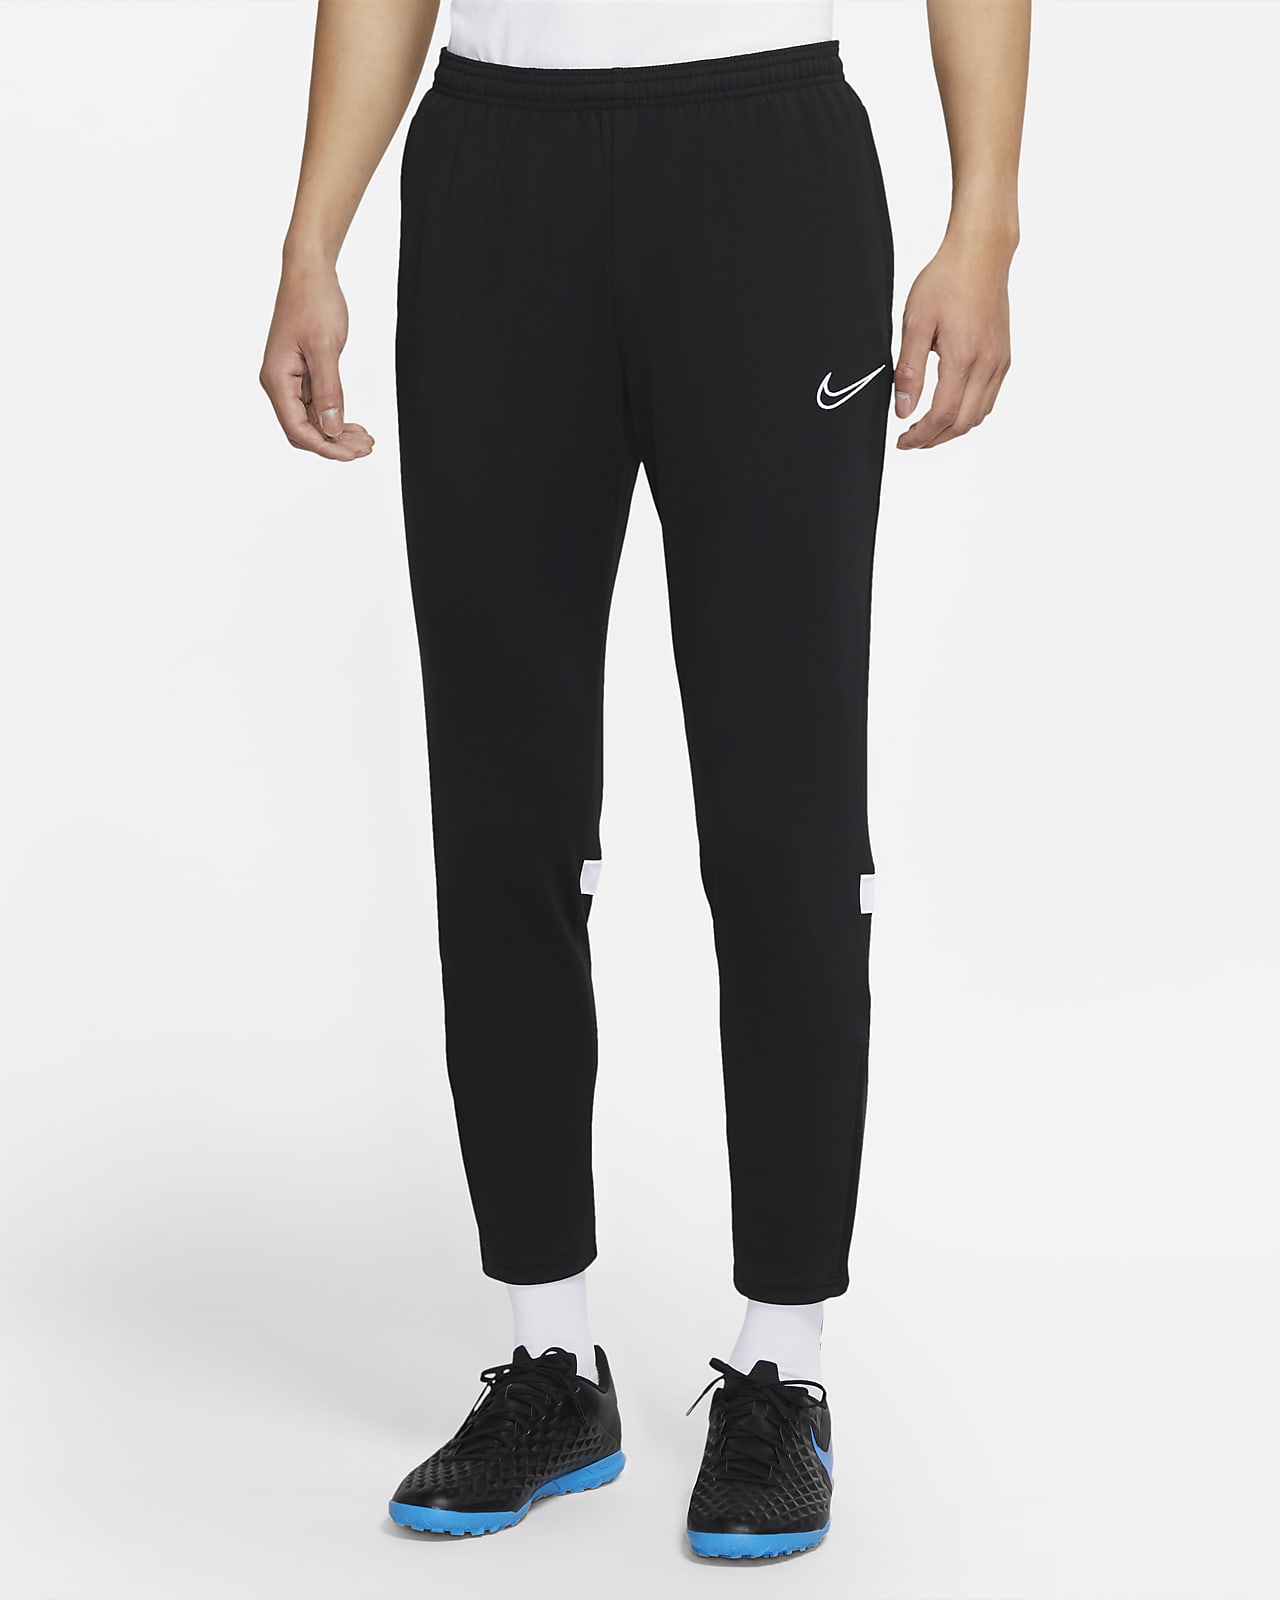 Amazon.com: Kids' Nike Dry Academy 18 Football Pants (Obsidian/White, XS):  Clothing, Shoes & Jewelry